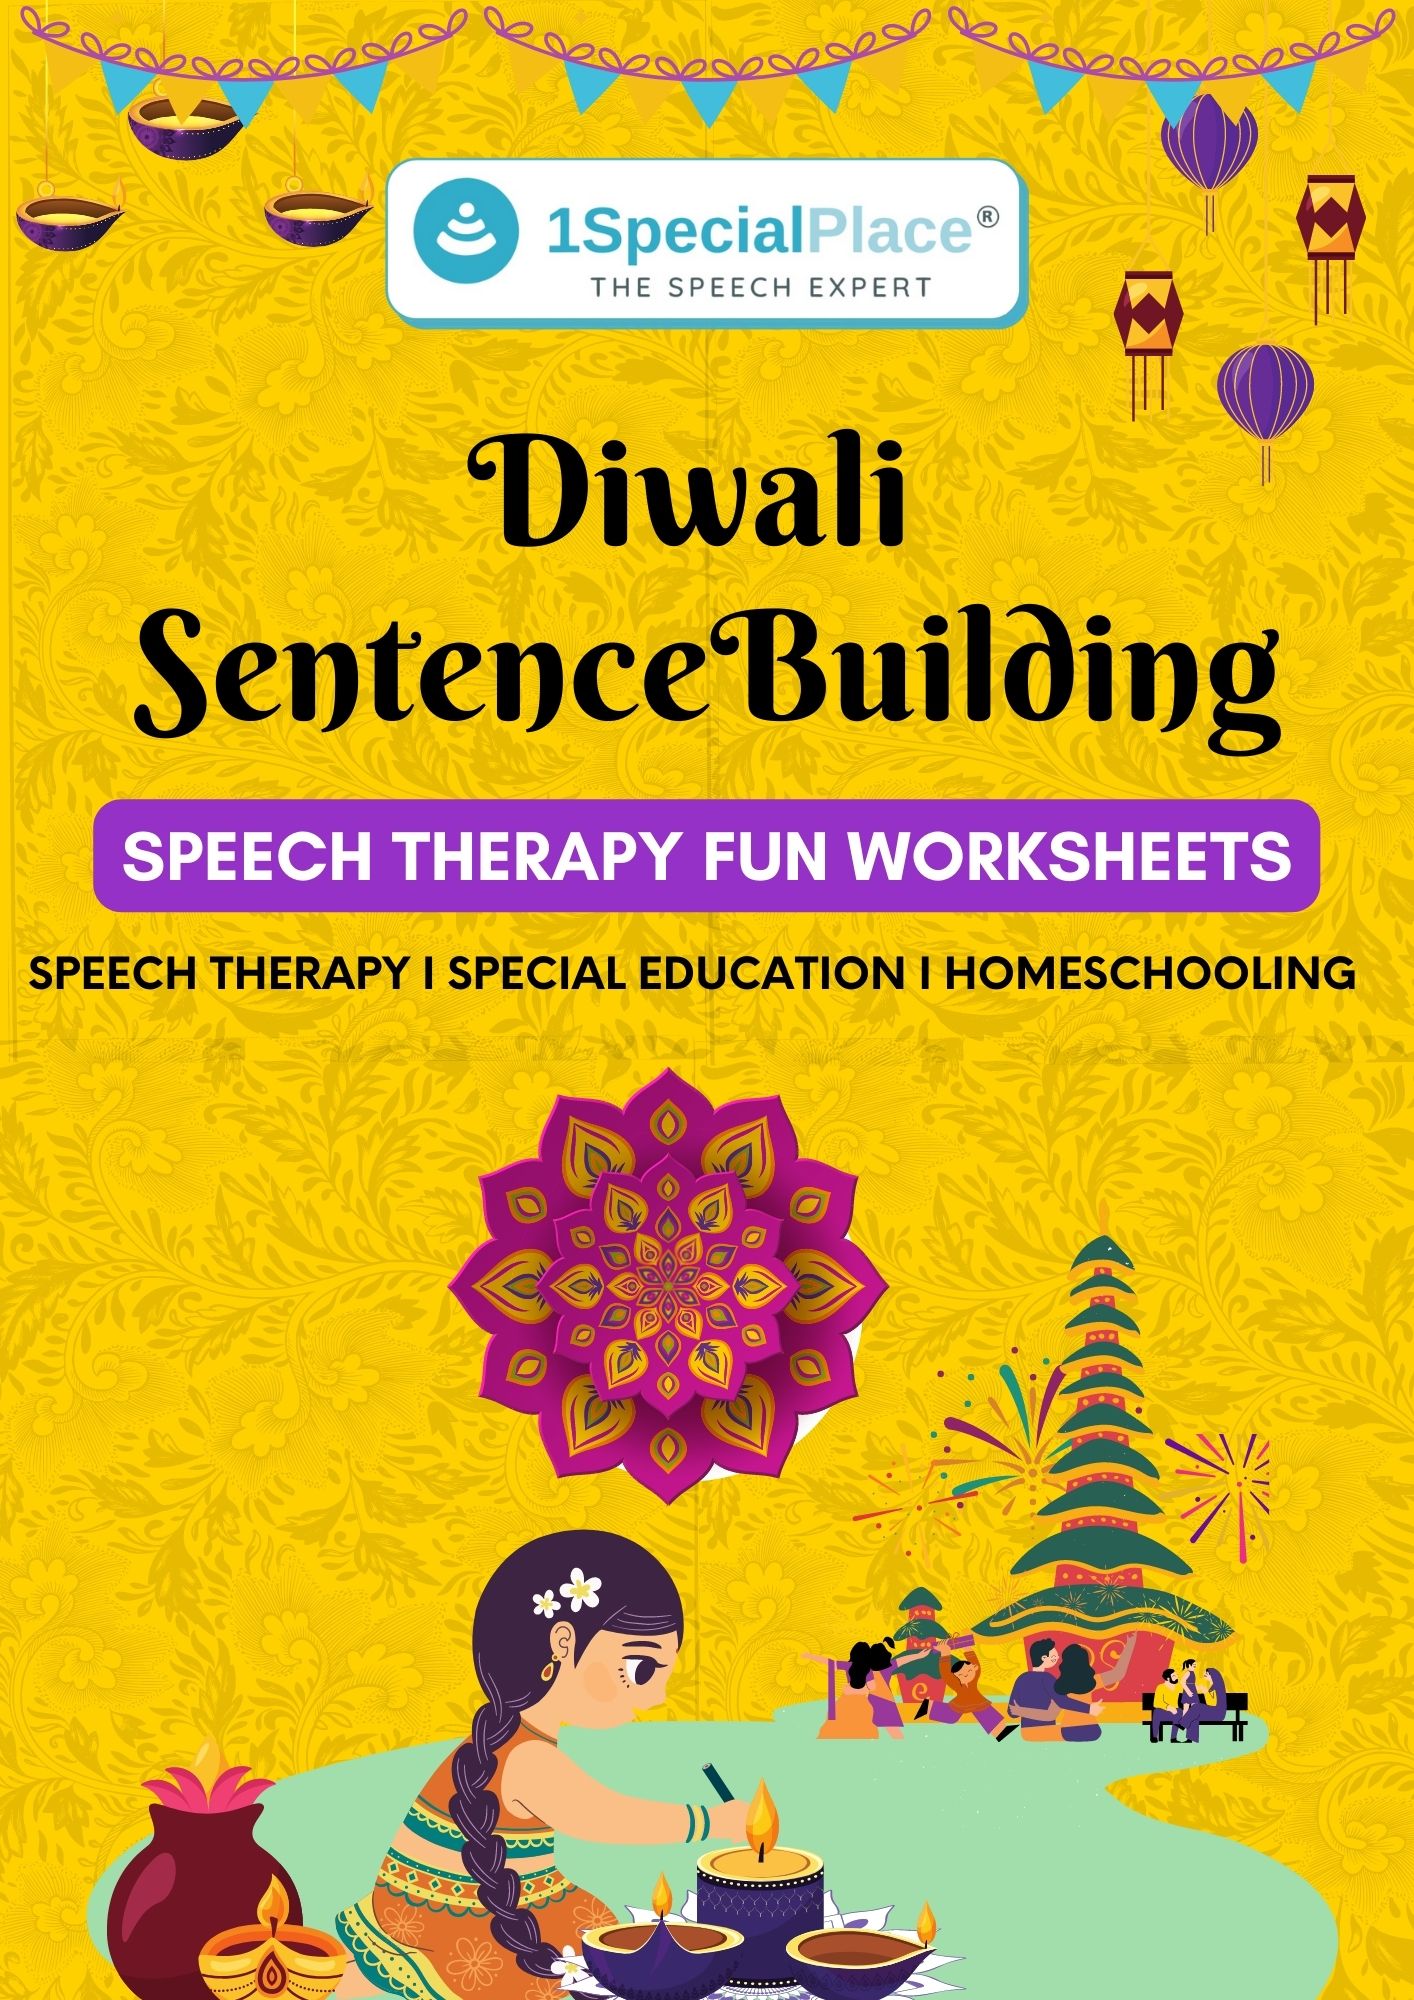 Diwali senctence building sheet